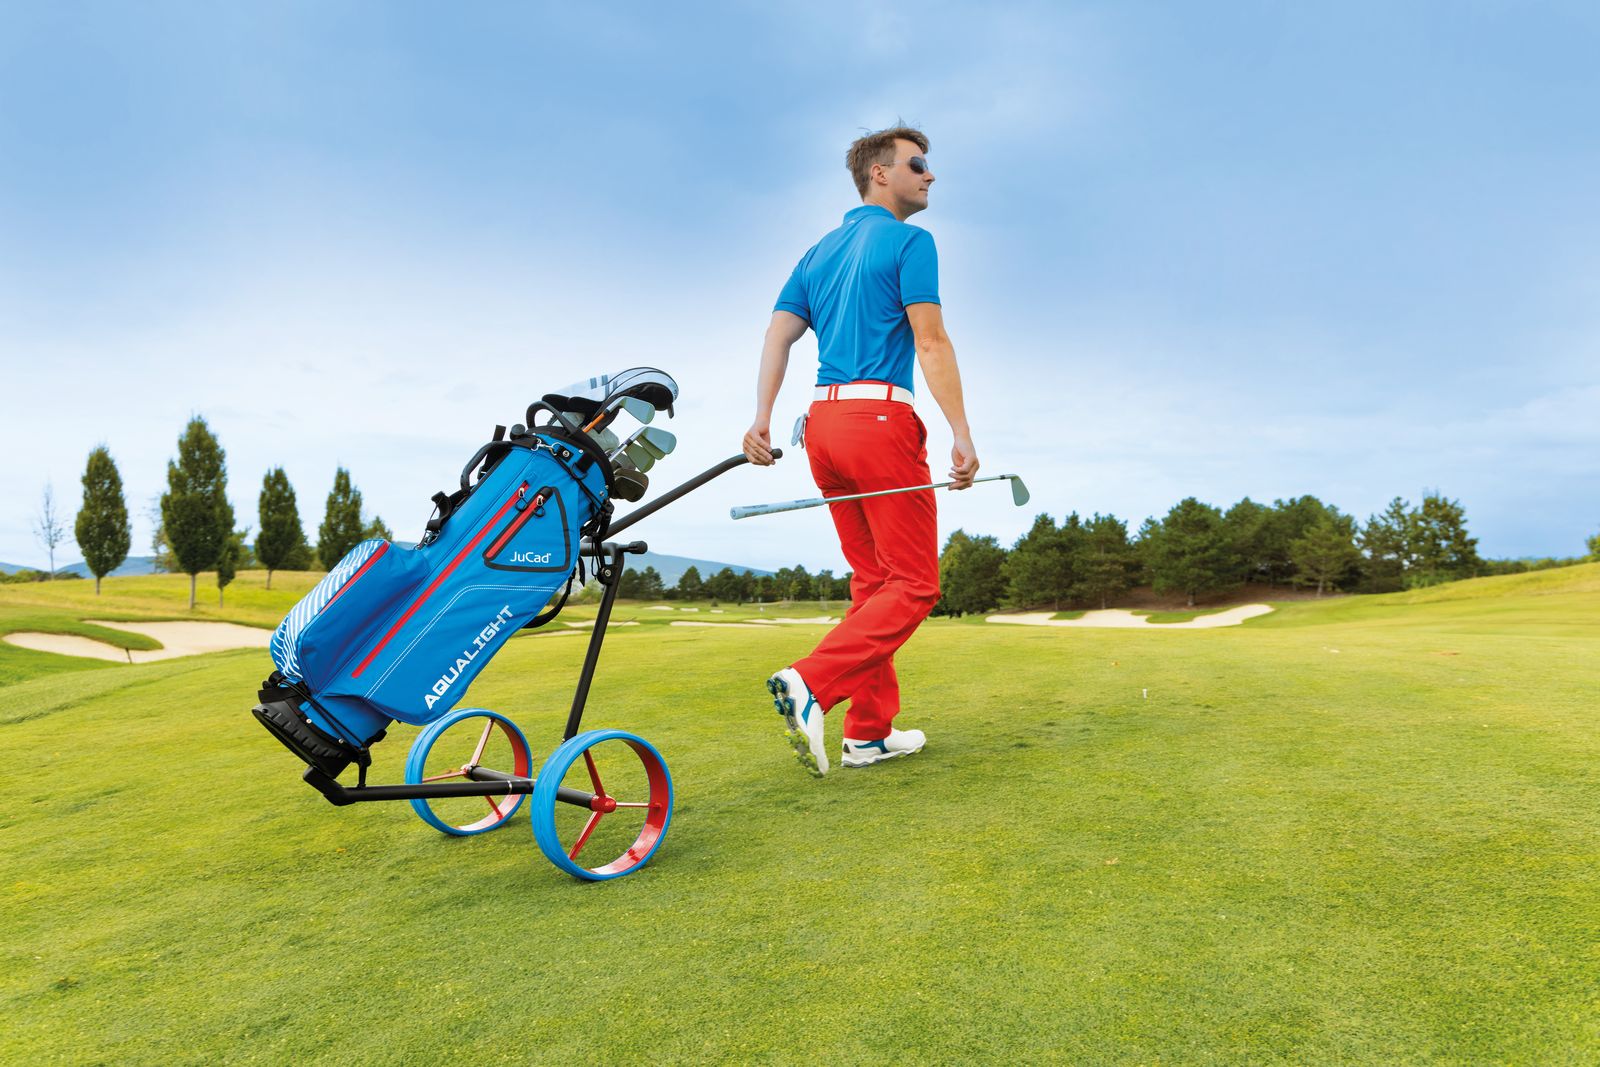 Golfer_JuCad-Carbon-Shadow_Bag-Aqualilght-blau-rot_RGB_1.jpg